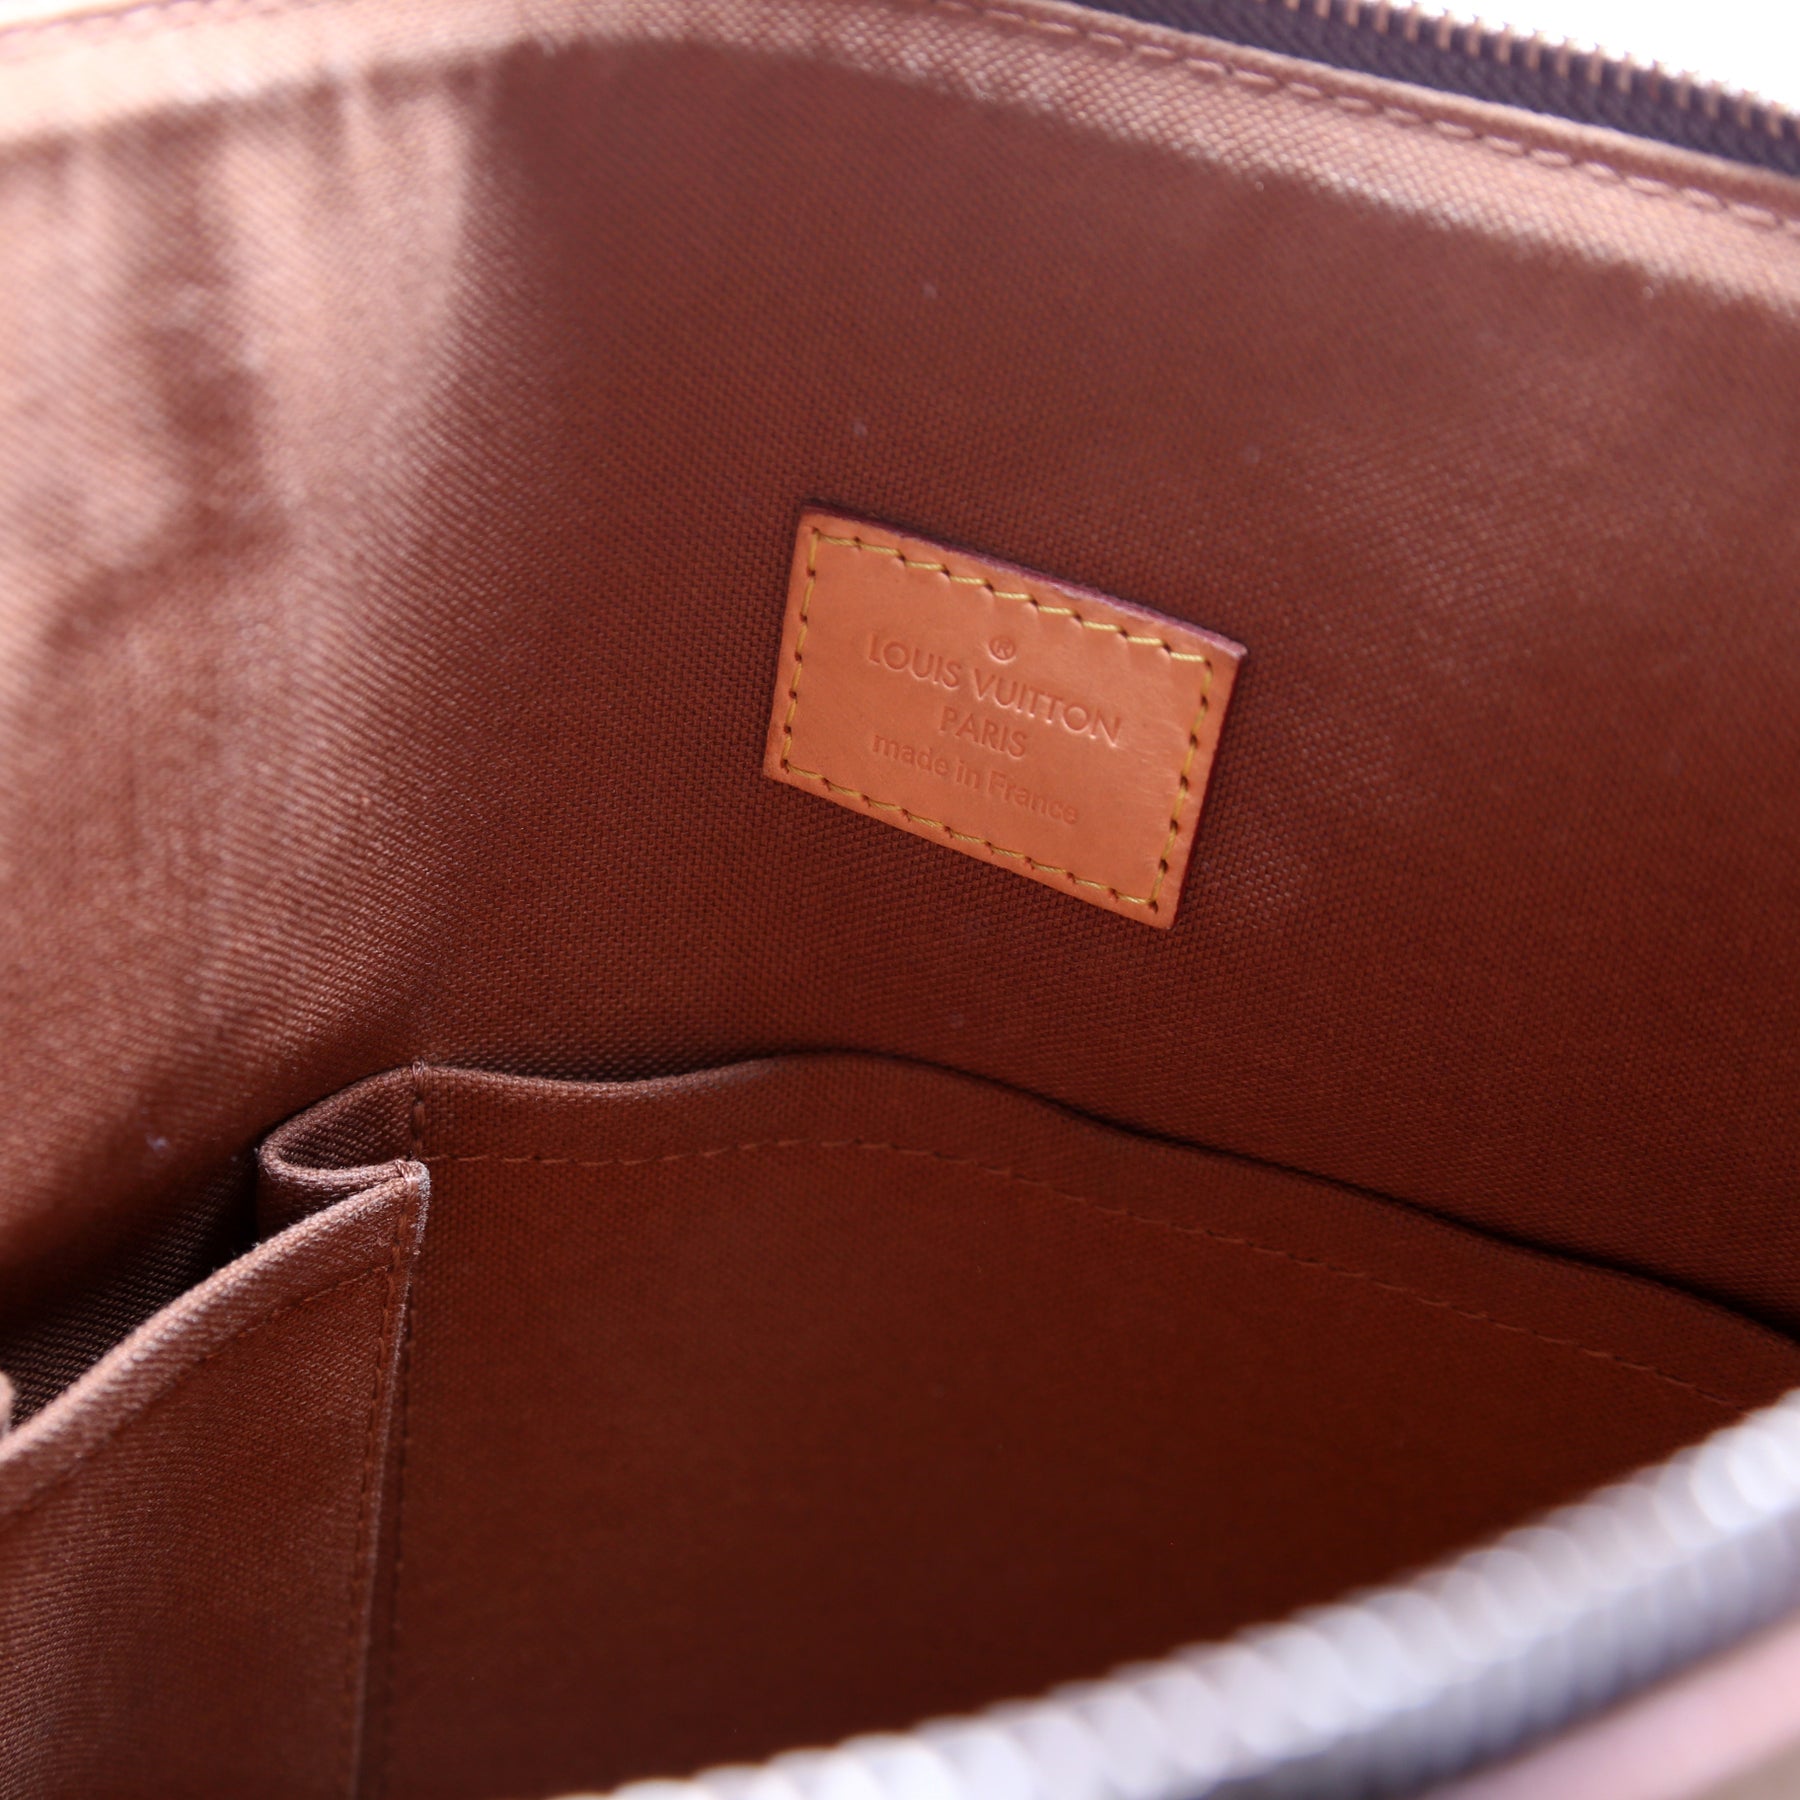 Odeon GM Monogram – Keeks Designer Handbags